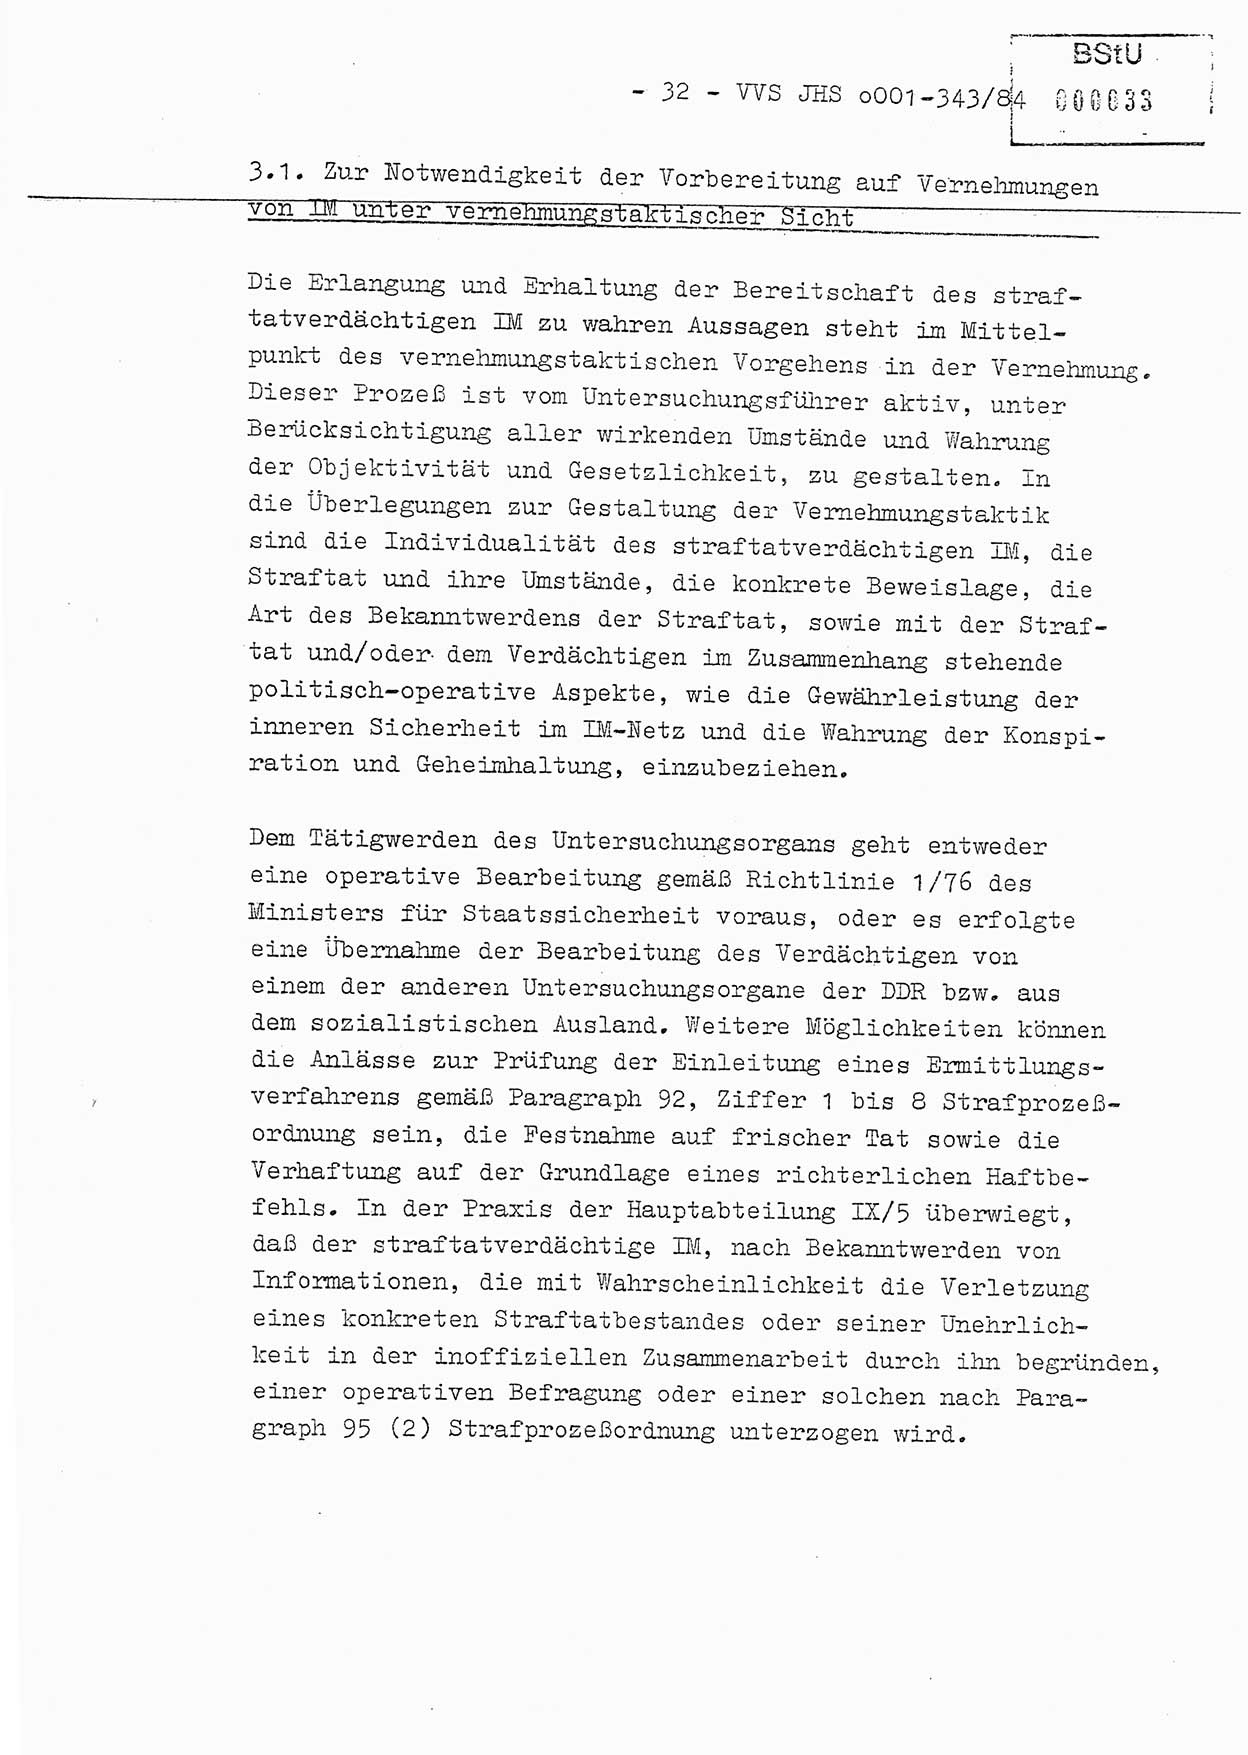 Diplomarbeit, Oberleutnant Bernd Michael (HA Ⅸ/5), Oberleutnant Peter Felber (HA IX/5), Ministerium für Staatssicherheit (MfS) [Deutsche Demokratische Republik (DDR)], Juristische Hochschule (JHS), Vertrauliche Verschlußsache (VVS) o001-343/84, Potsdam 1985, Seite 32 (Dipl.-Arb. MfS DDR JHS VVS o001-343/84 1985, S. 32)